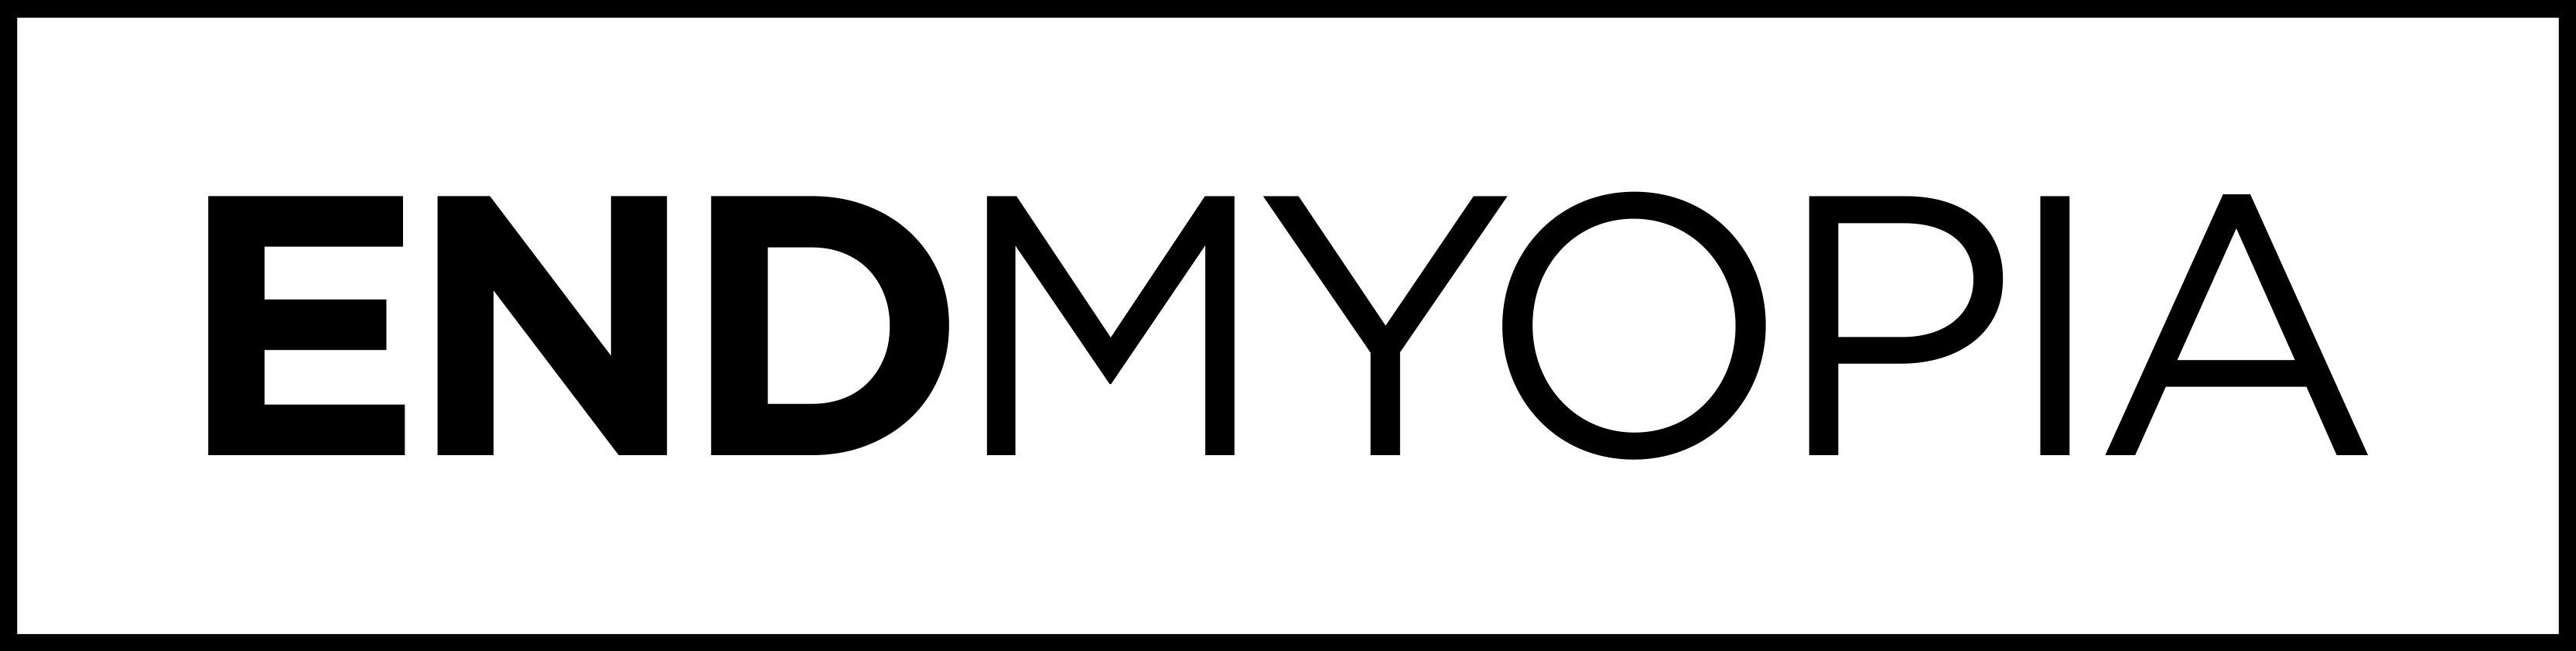 Endmyopia longform logo transparent background.png